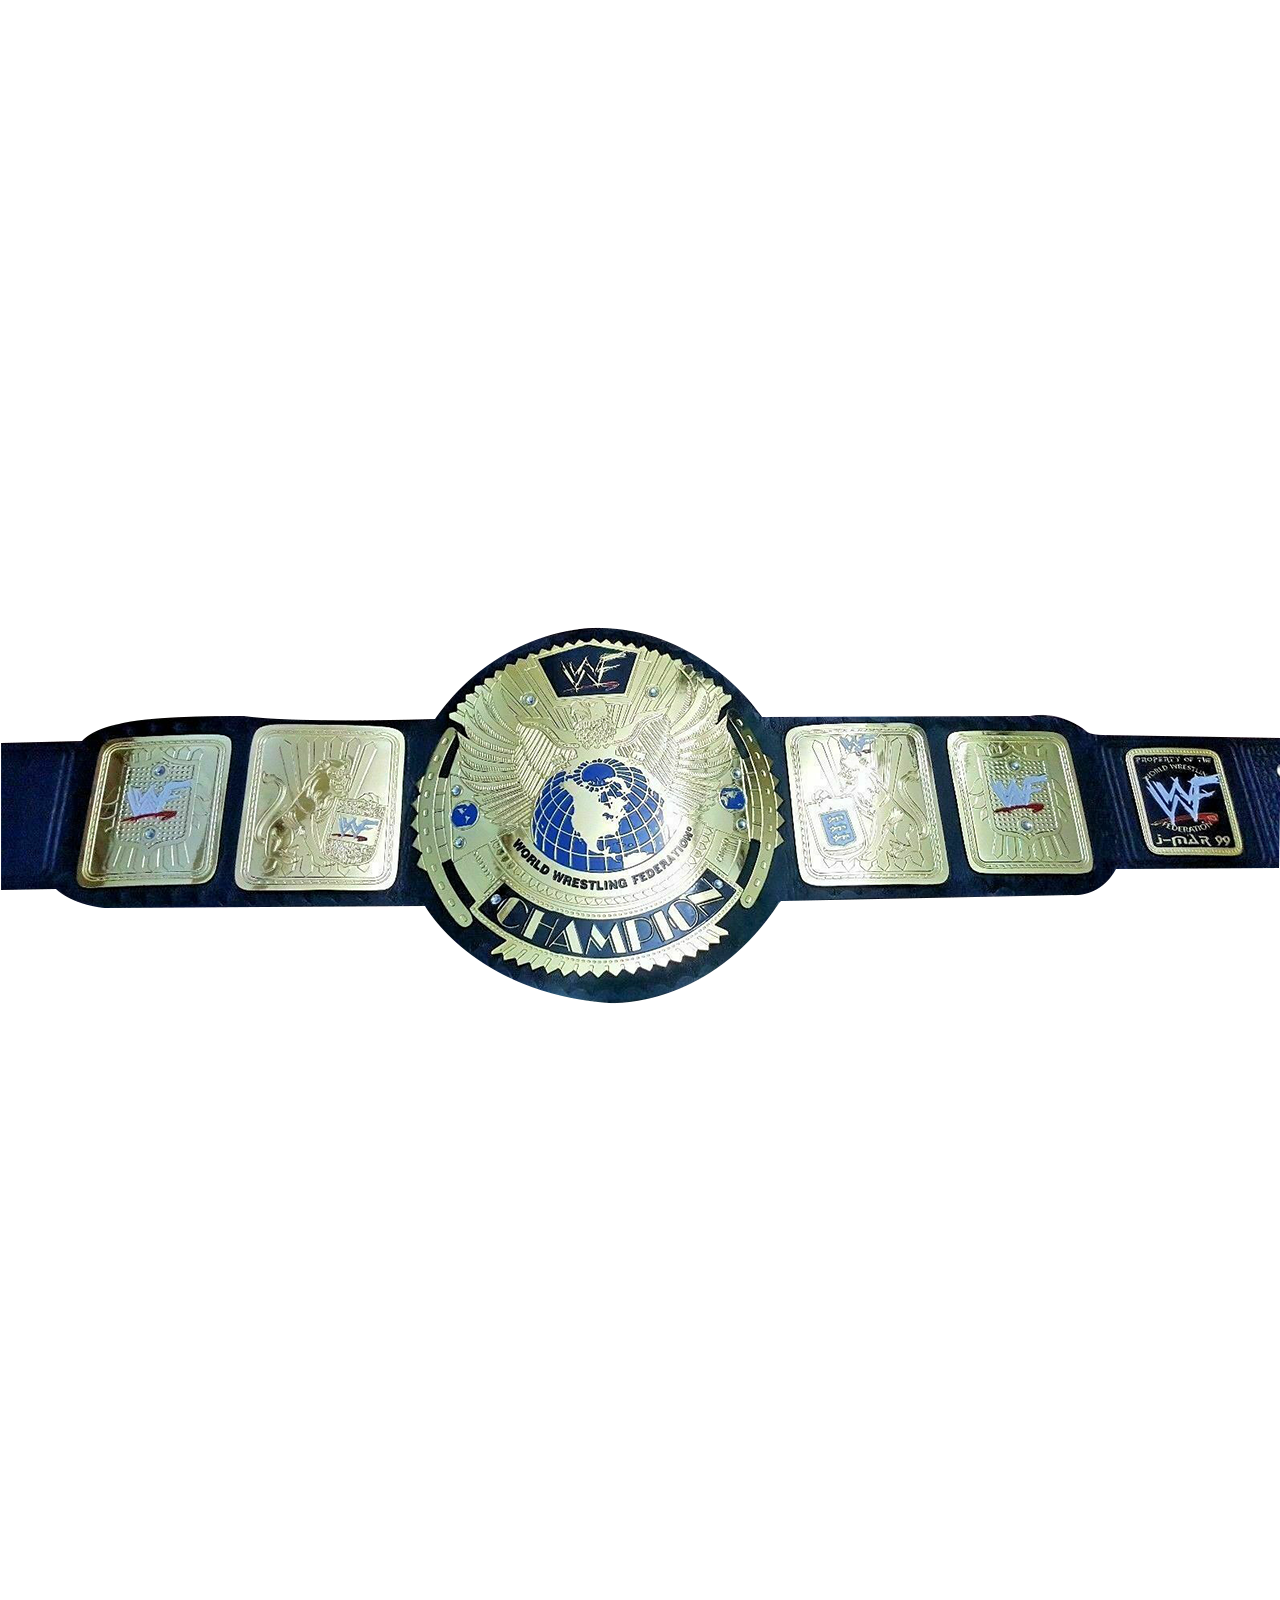 WWF Attitude Era Scratch Logo BIG EAGLE World Heavyweight Championship Belt 